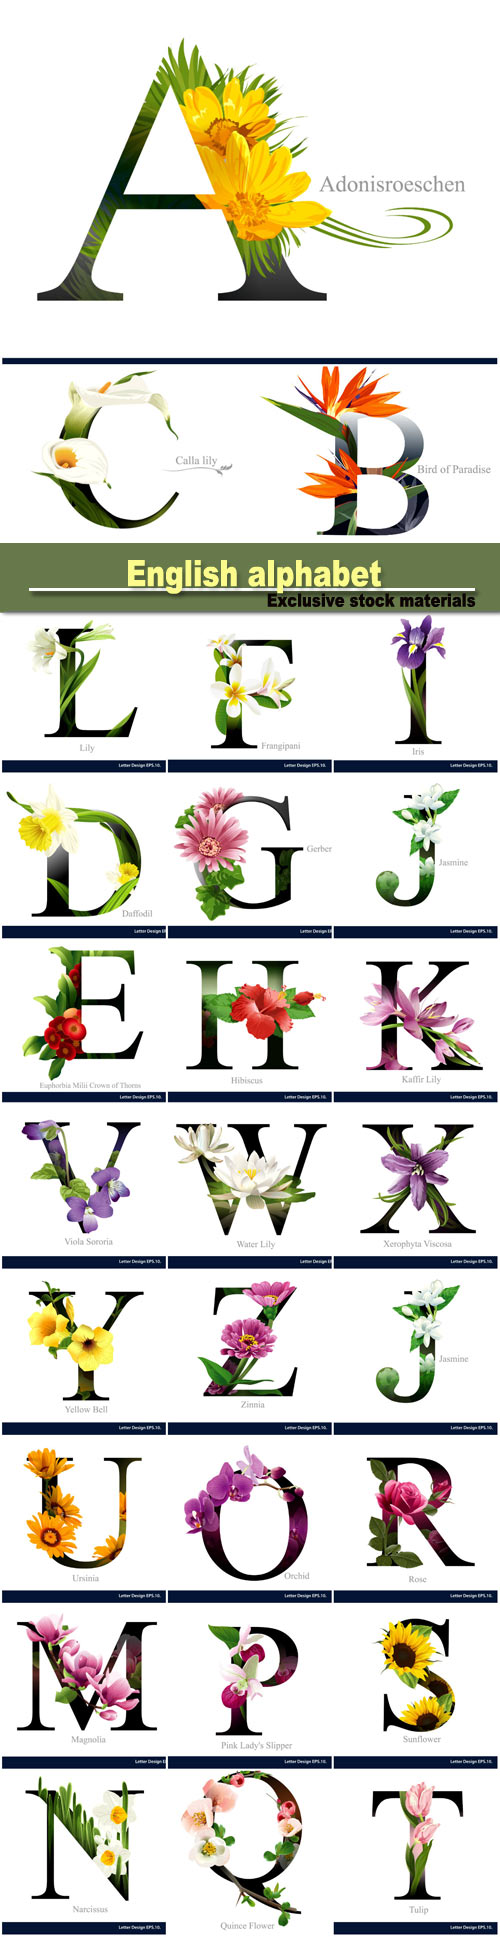 English Alphabet with flowers